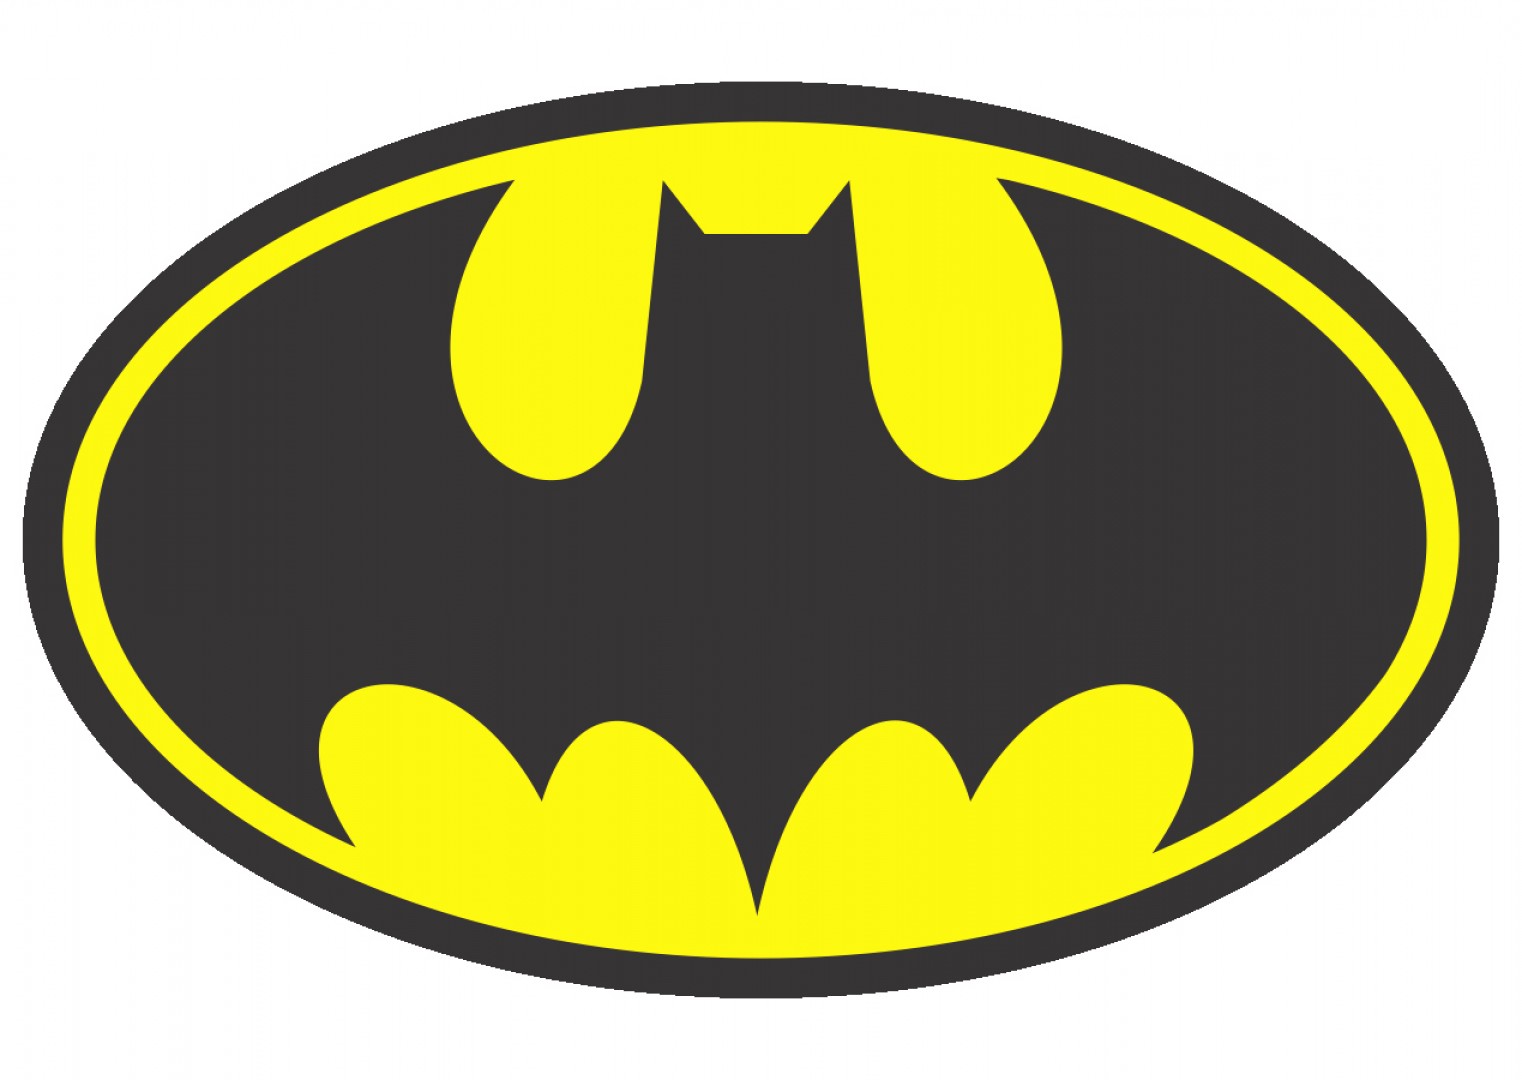 Batman Symbol Drawing | Free download on ClipArtMag